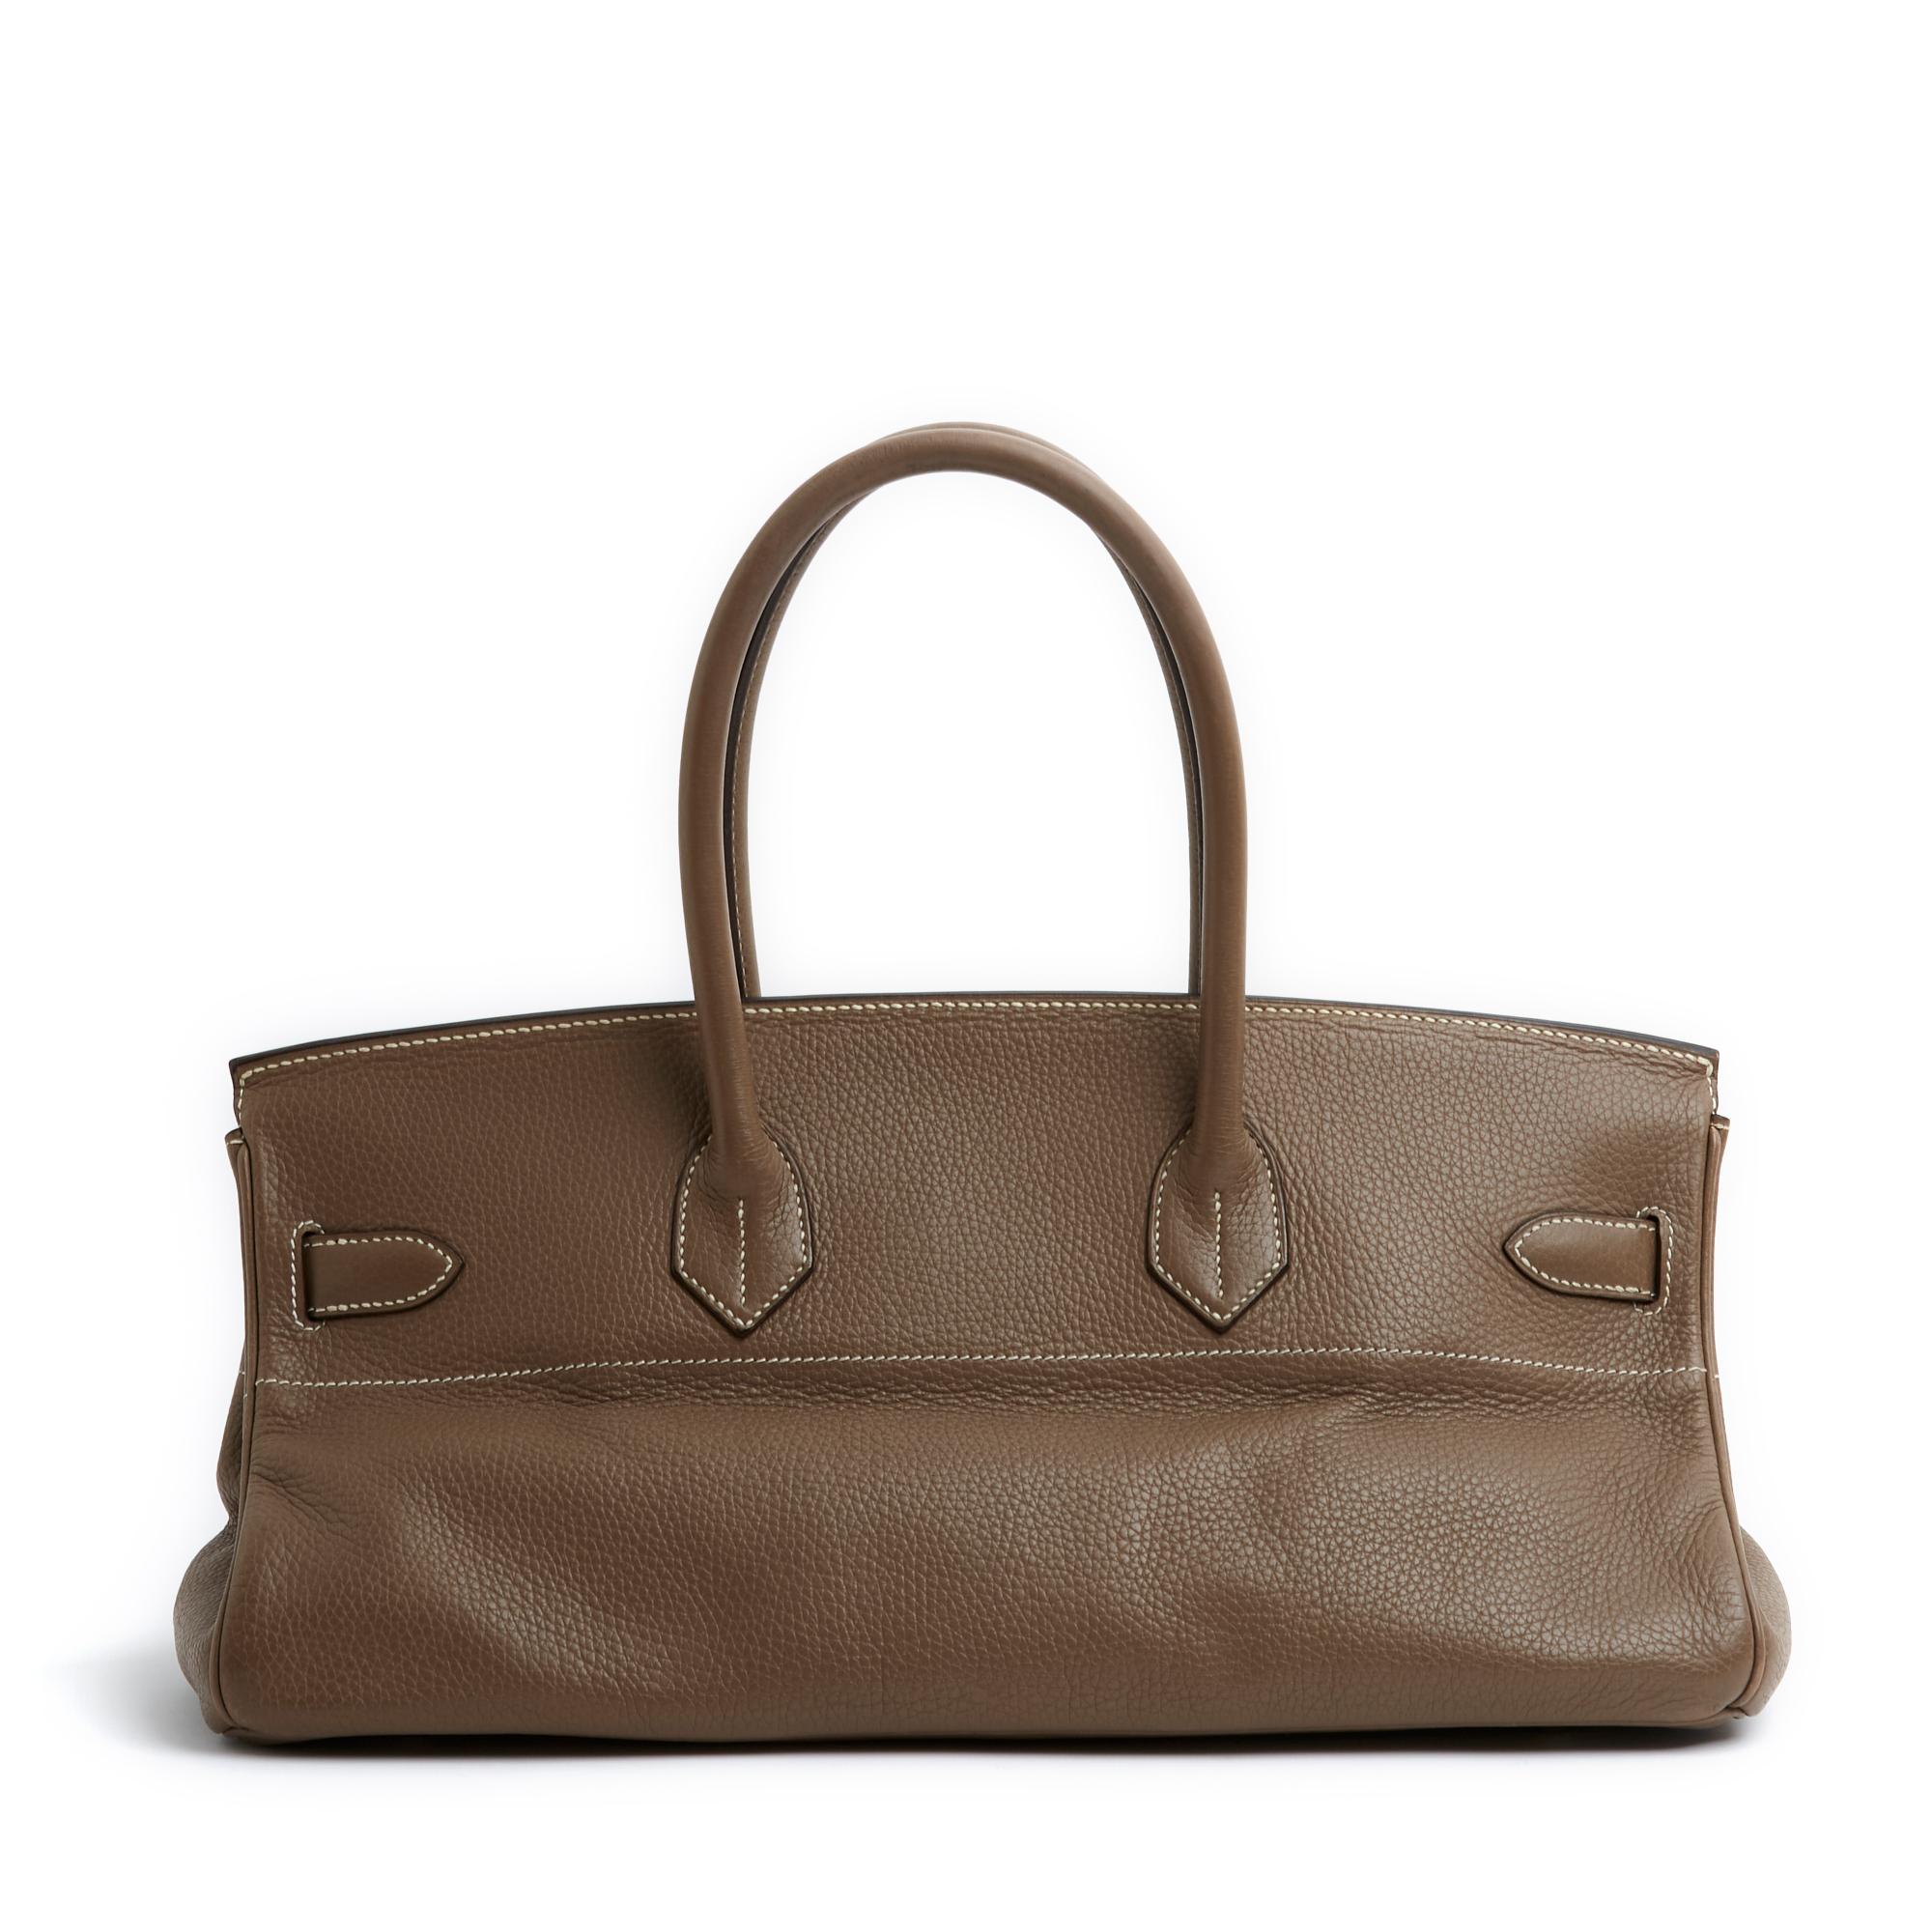 2006 JPG Hermès Birkin Shoulder Etoupe Leather Bag In Good Condition For Sale In PARIS, FR